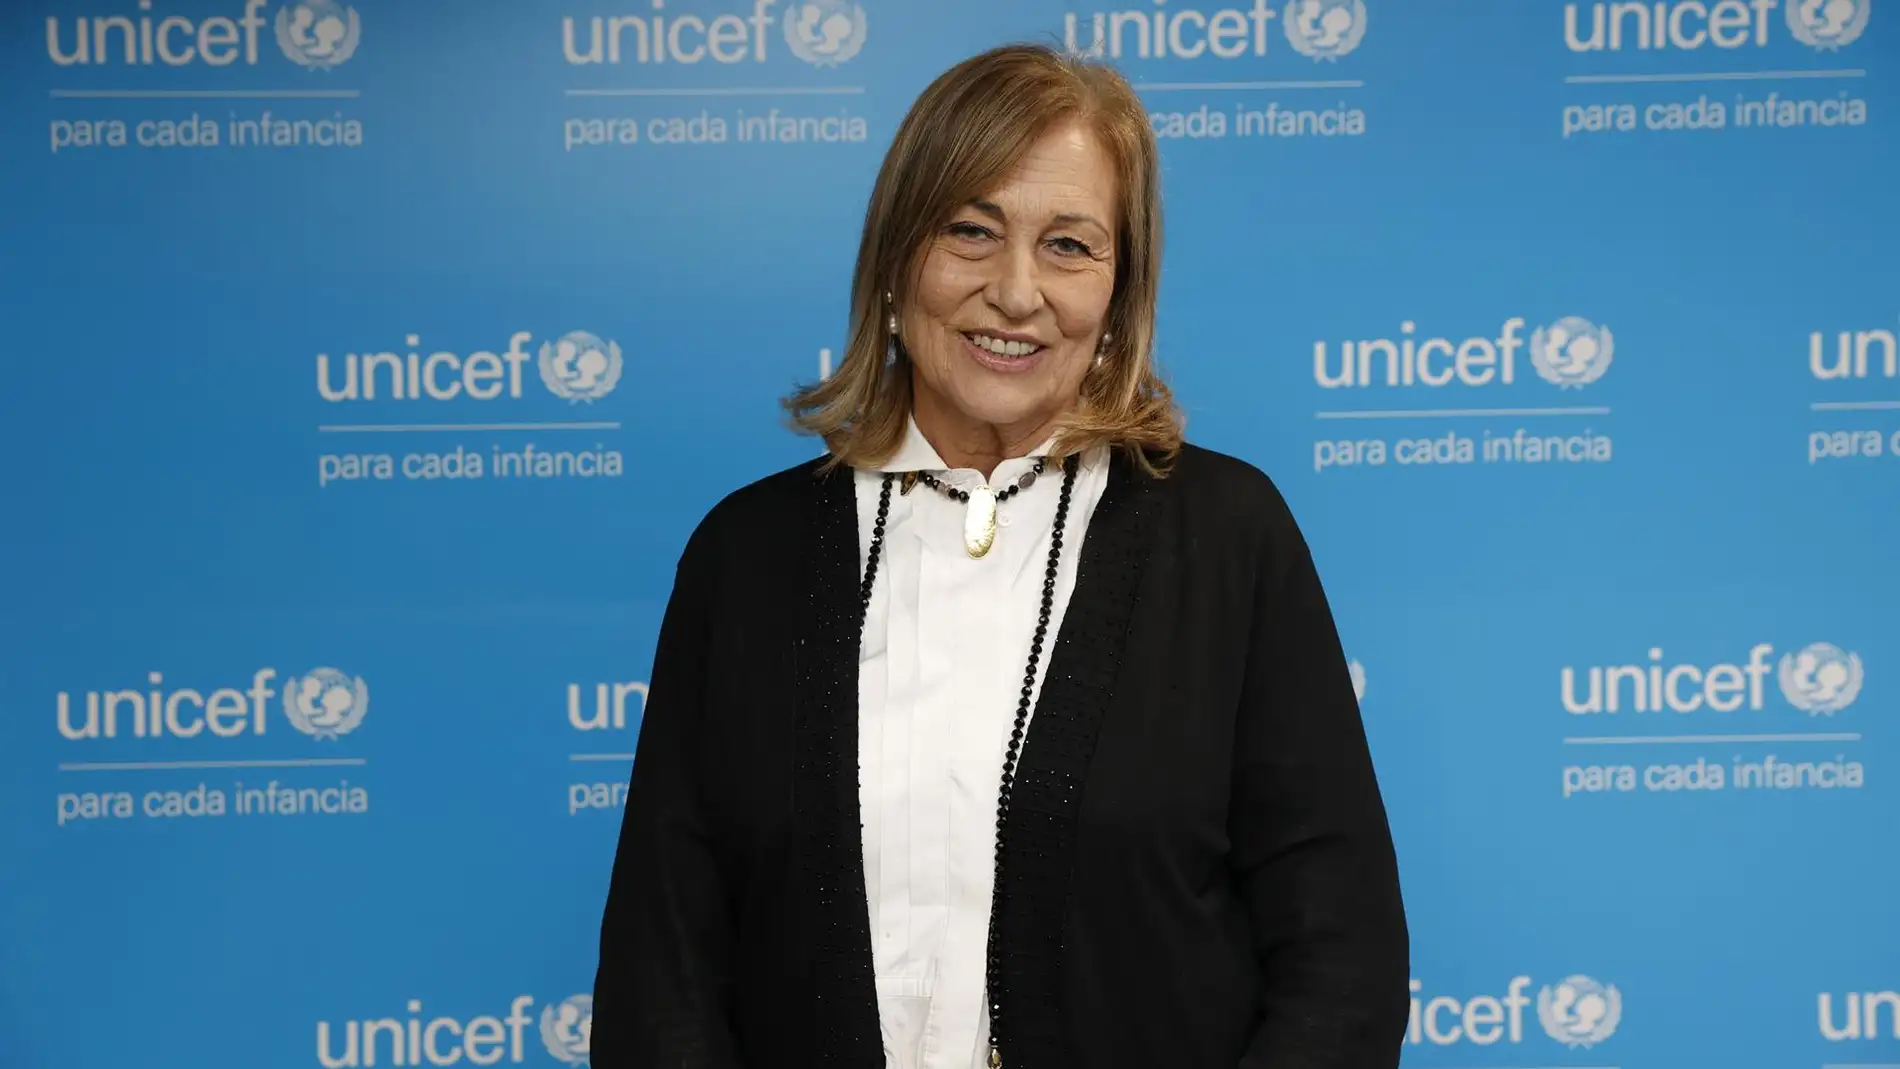 La profesora de la UEx, Teresa Chamorro Valdés, nueva presidenta de Unicef Comité Extremadura